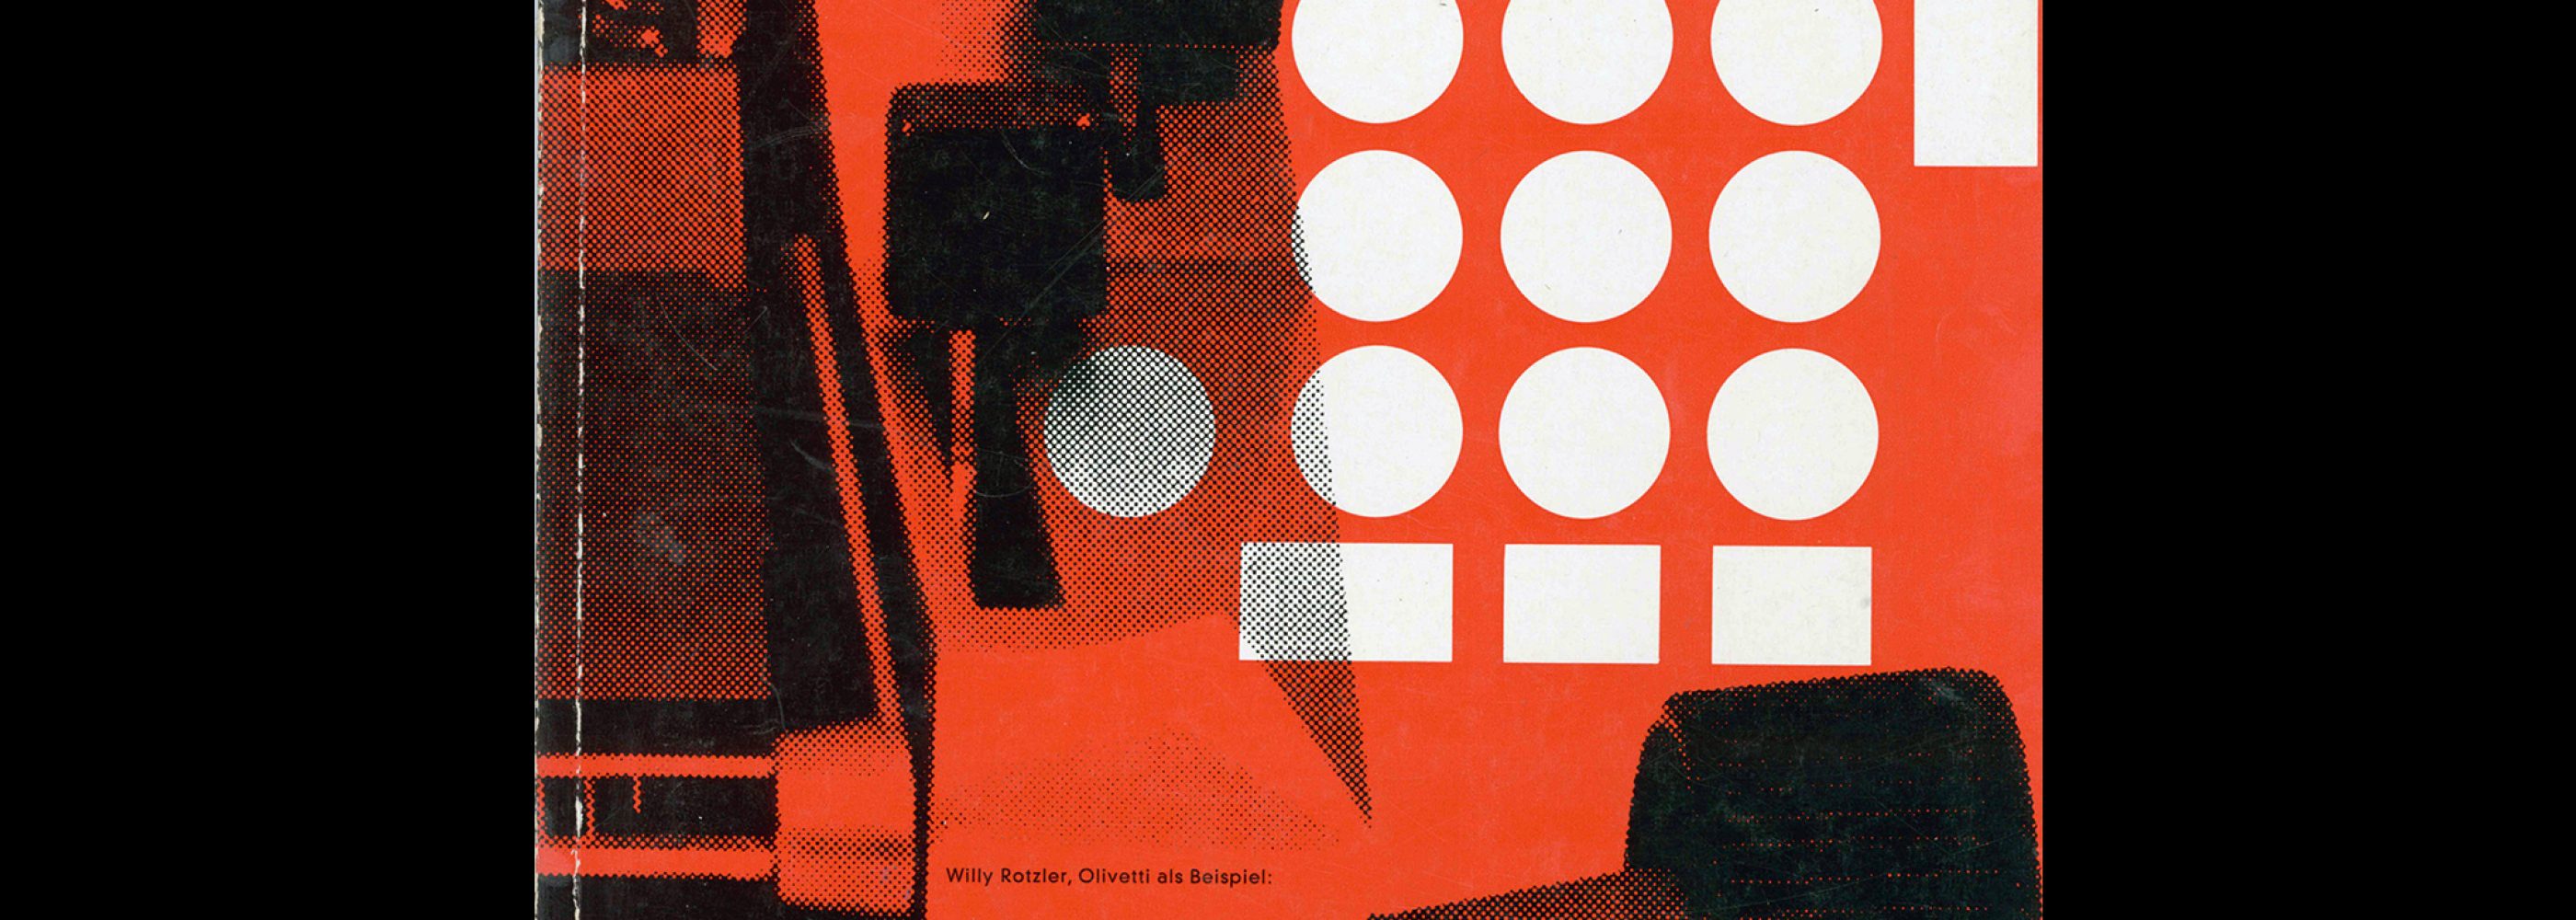 Form, Internationale Revue 14, 1961. Designed by Karl Oskar Blase